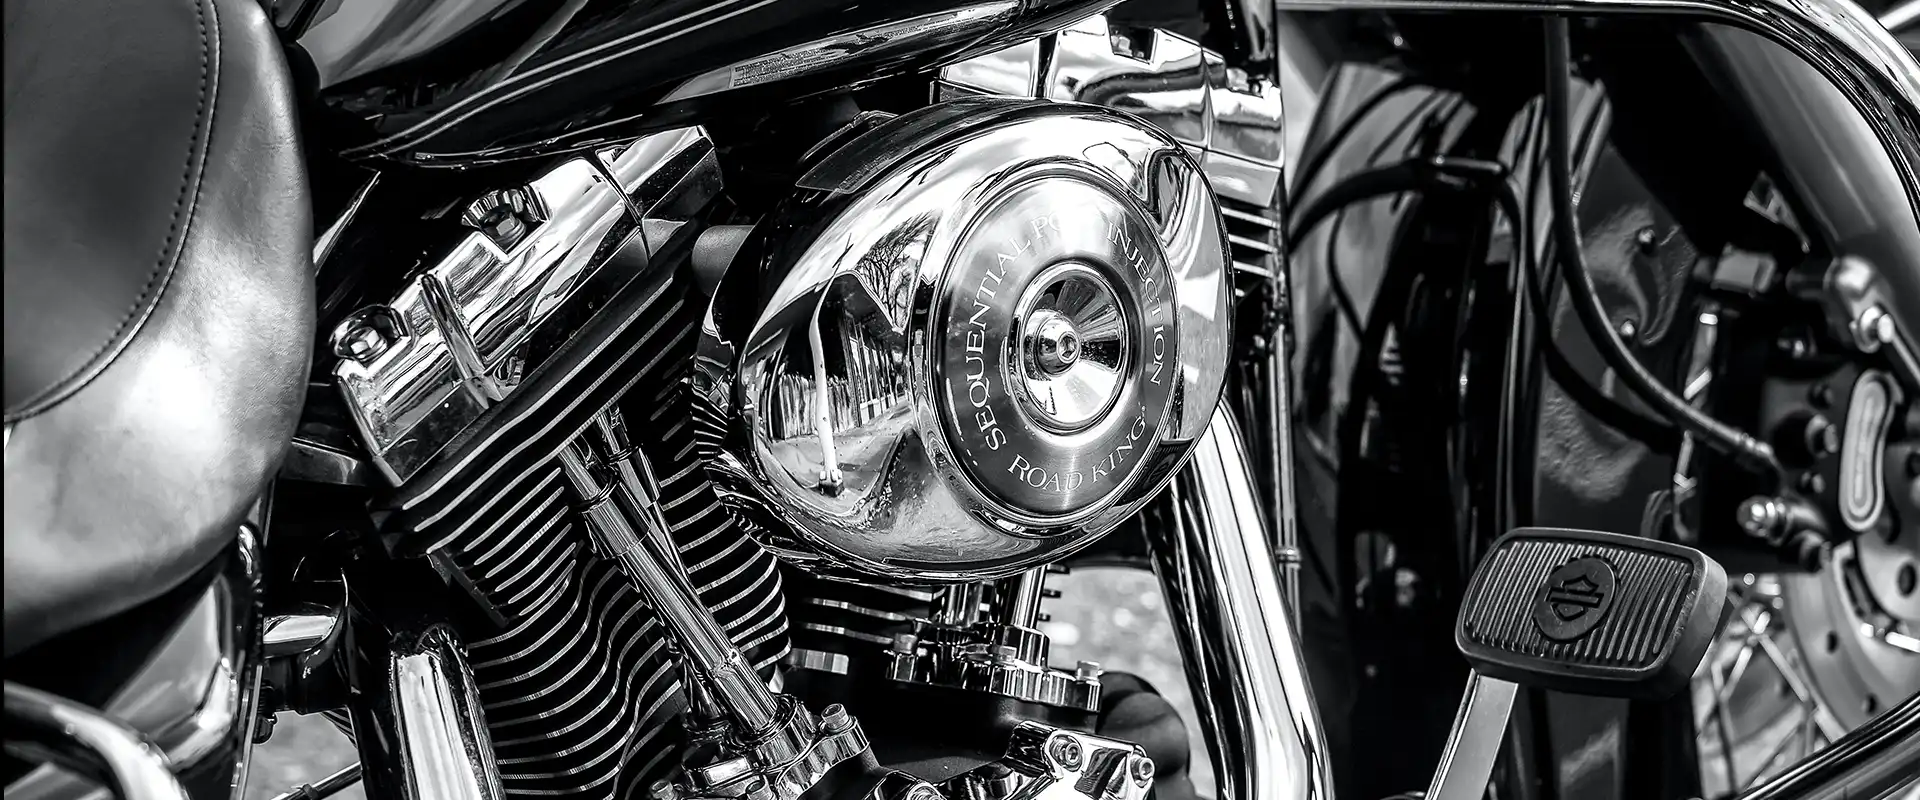 Harley Davidson Motorcycle à Dax